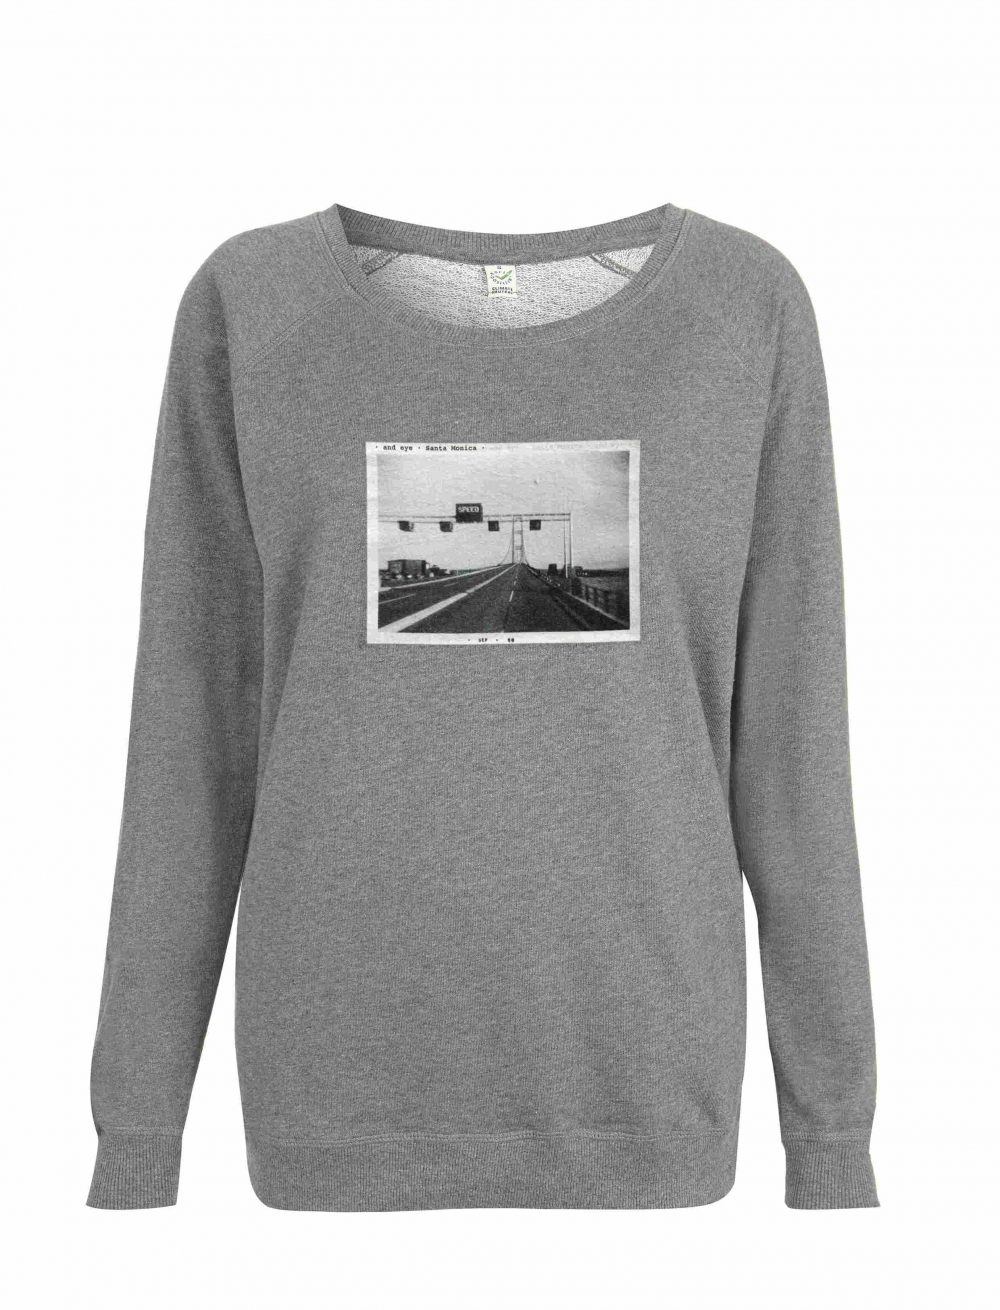 Women´s organic sweatshirt with a vintage image